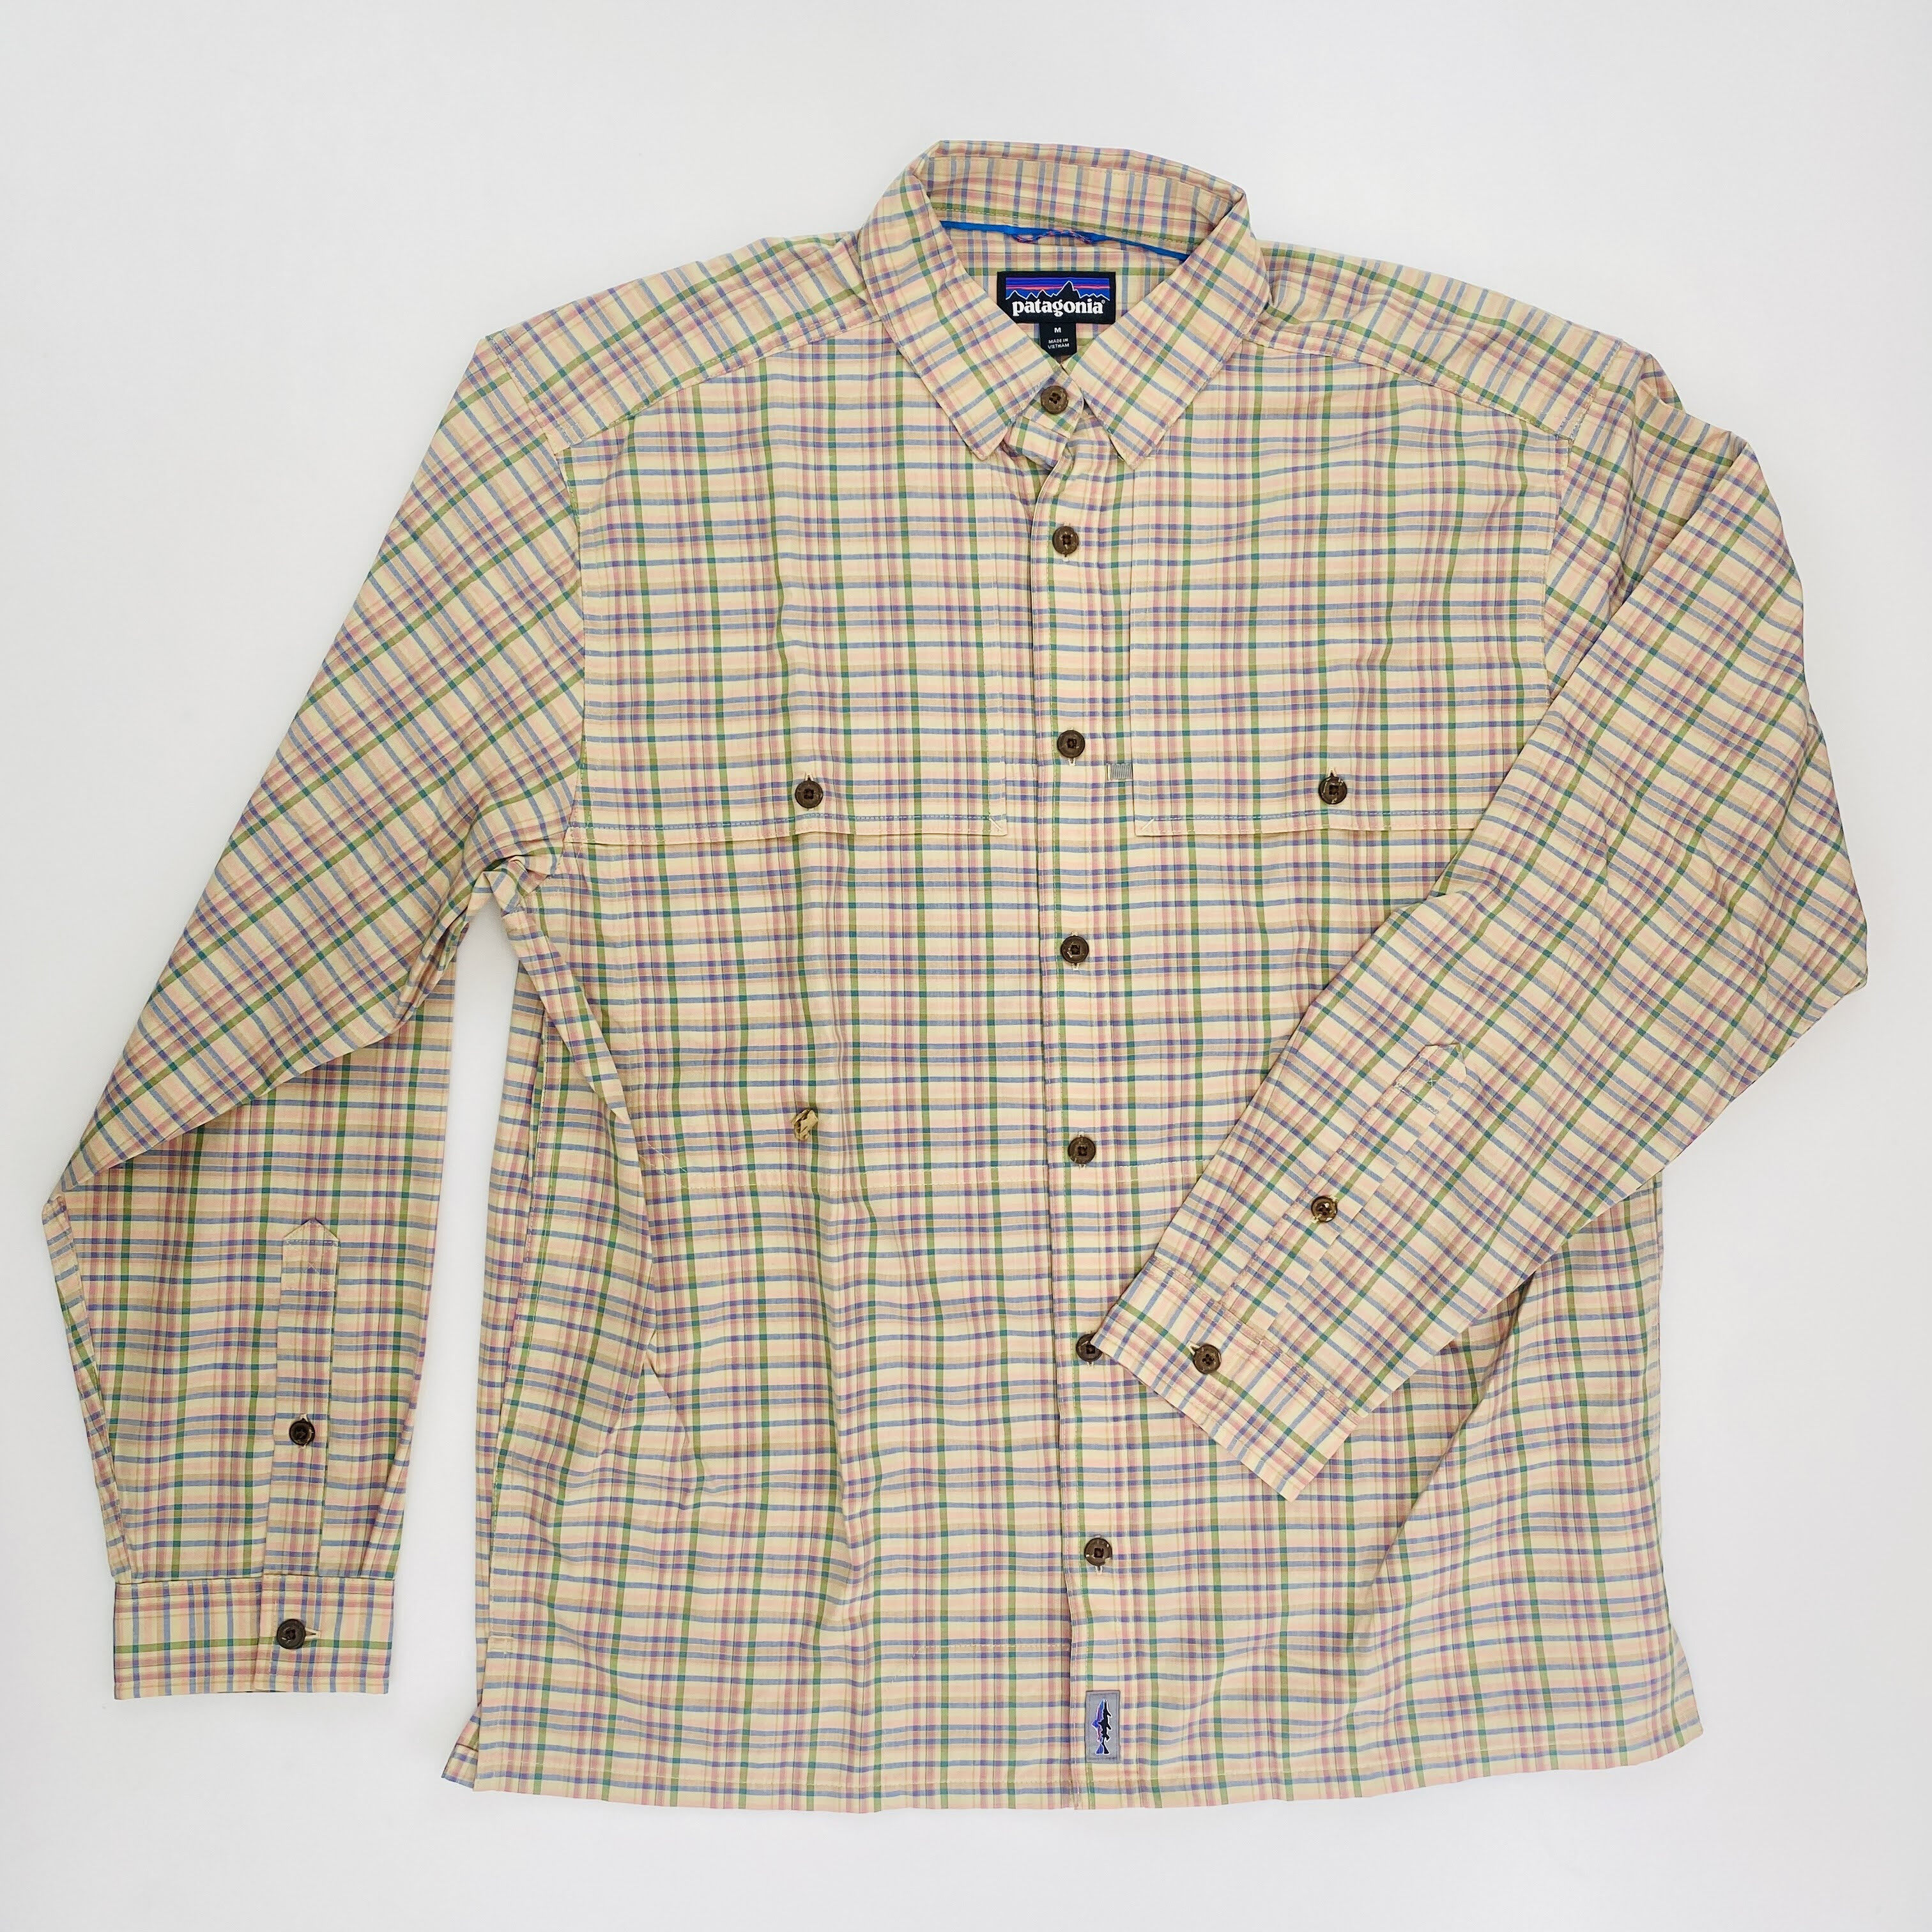 Patagonia M'S L/S Island Hopper Shirt - Second Hand Shirt - Men's - Multicolored - M | Hardloop